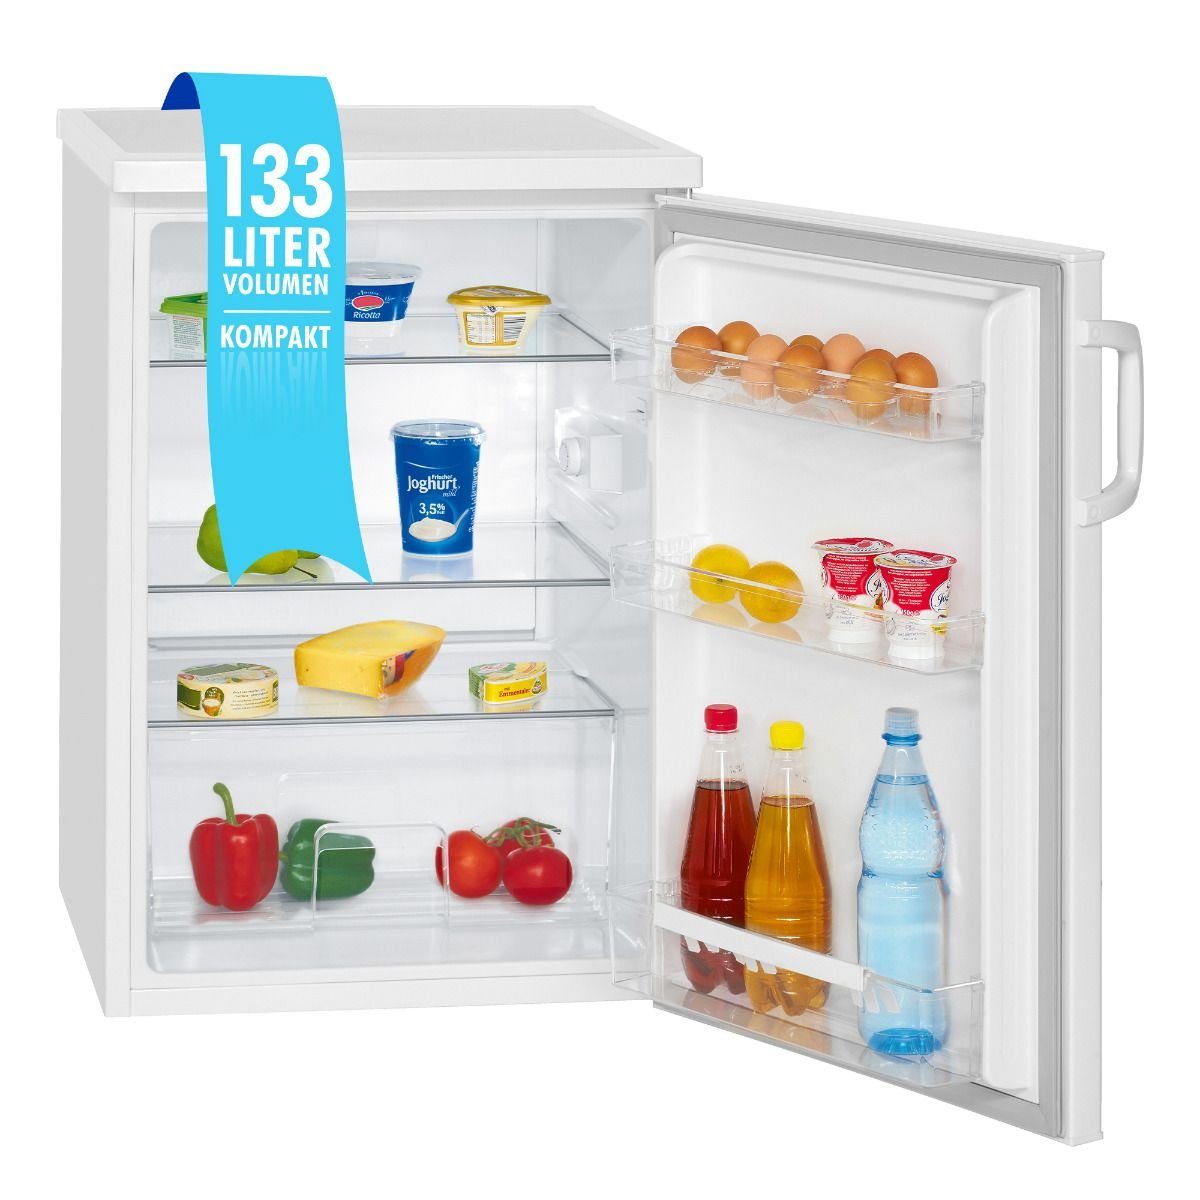 BOMANN Kühlschrank 845.0 2195.1, 56.0 VS weiß breit 2195.1 VS cm cm hoch